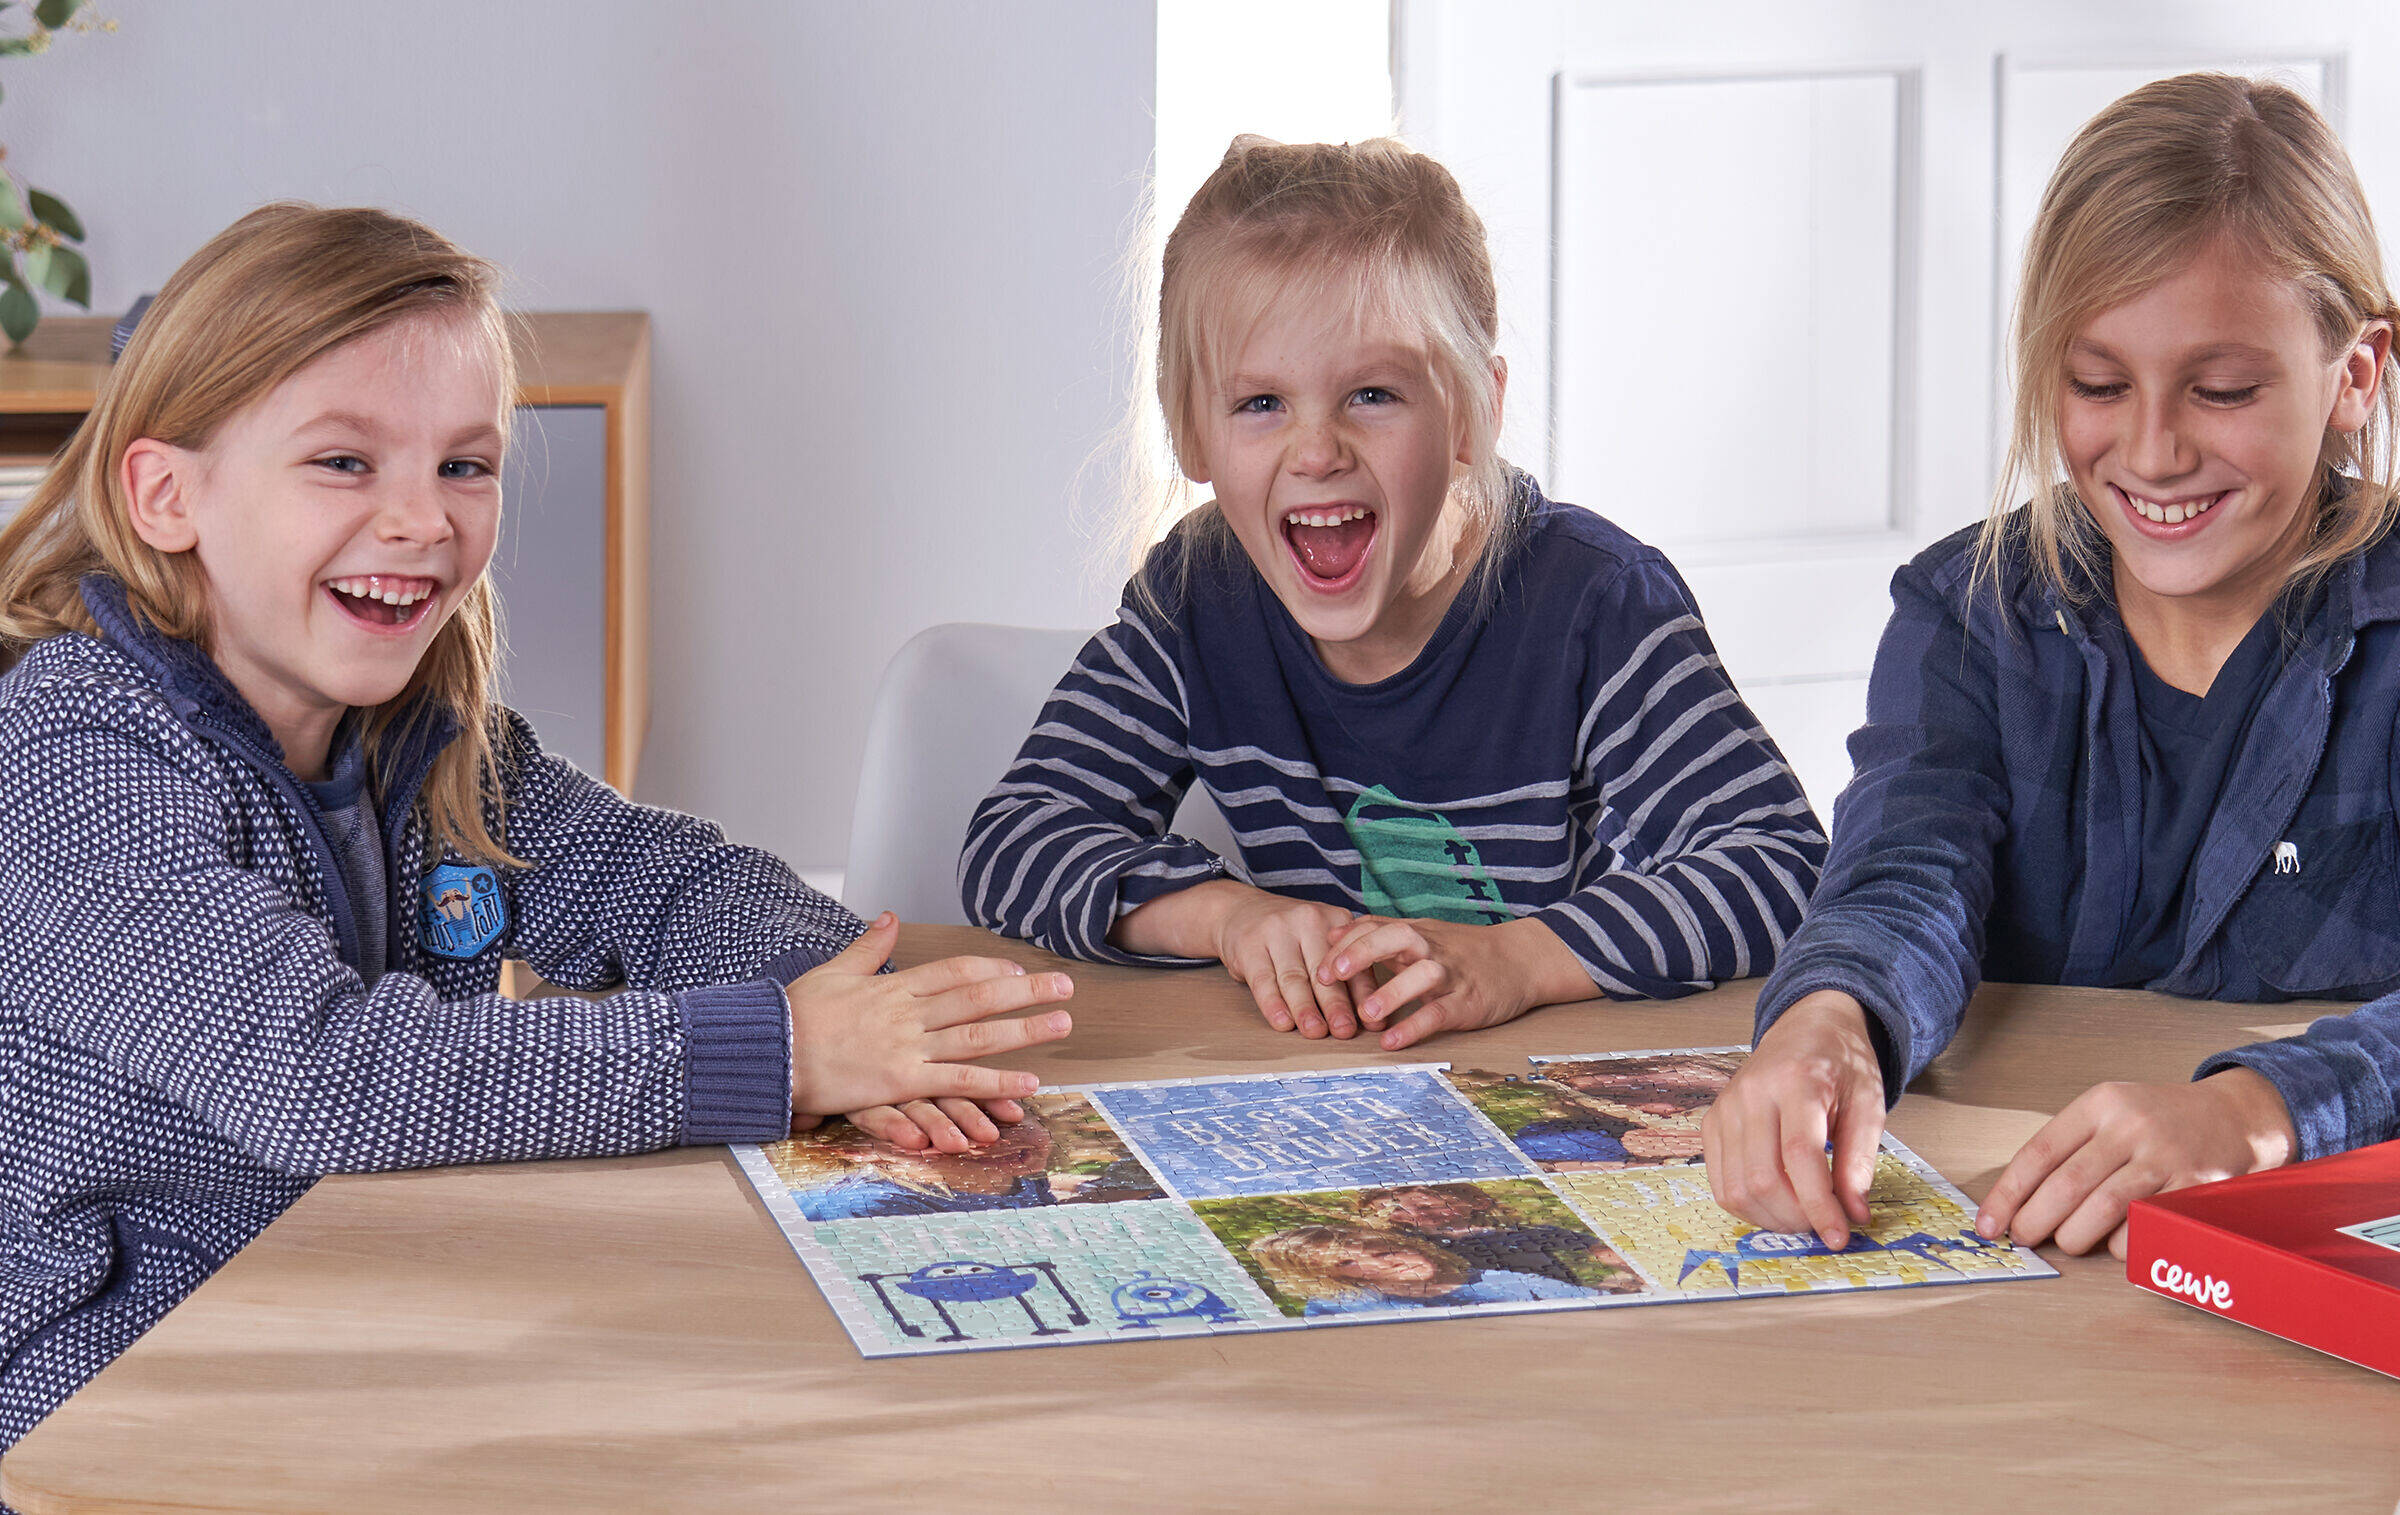 Das Puzzle ist fertig, drei Kinder lachen dem Betrachter entgegen.